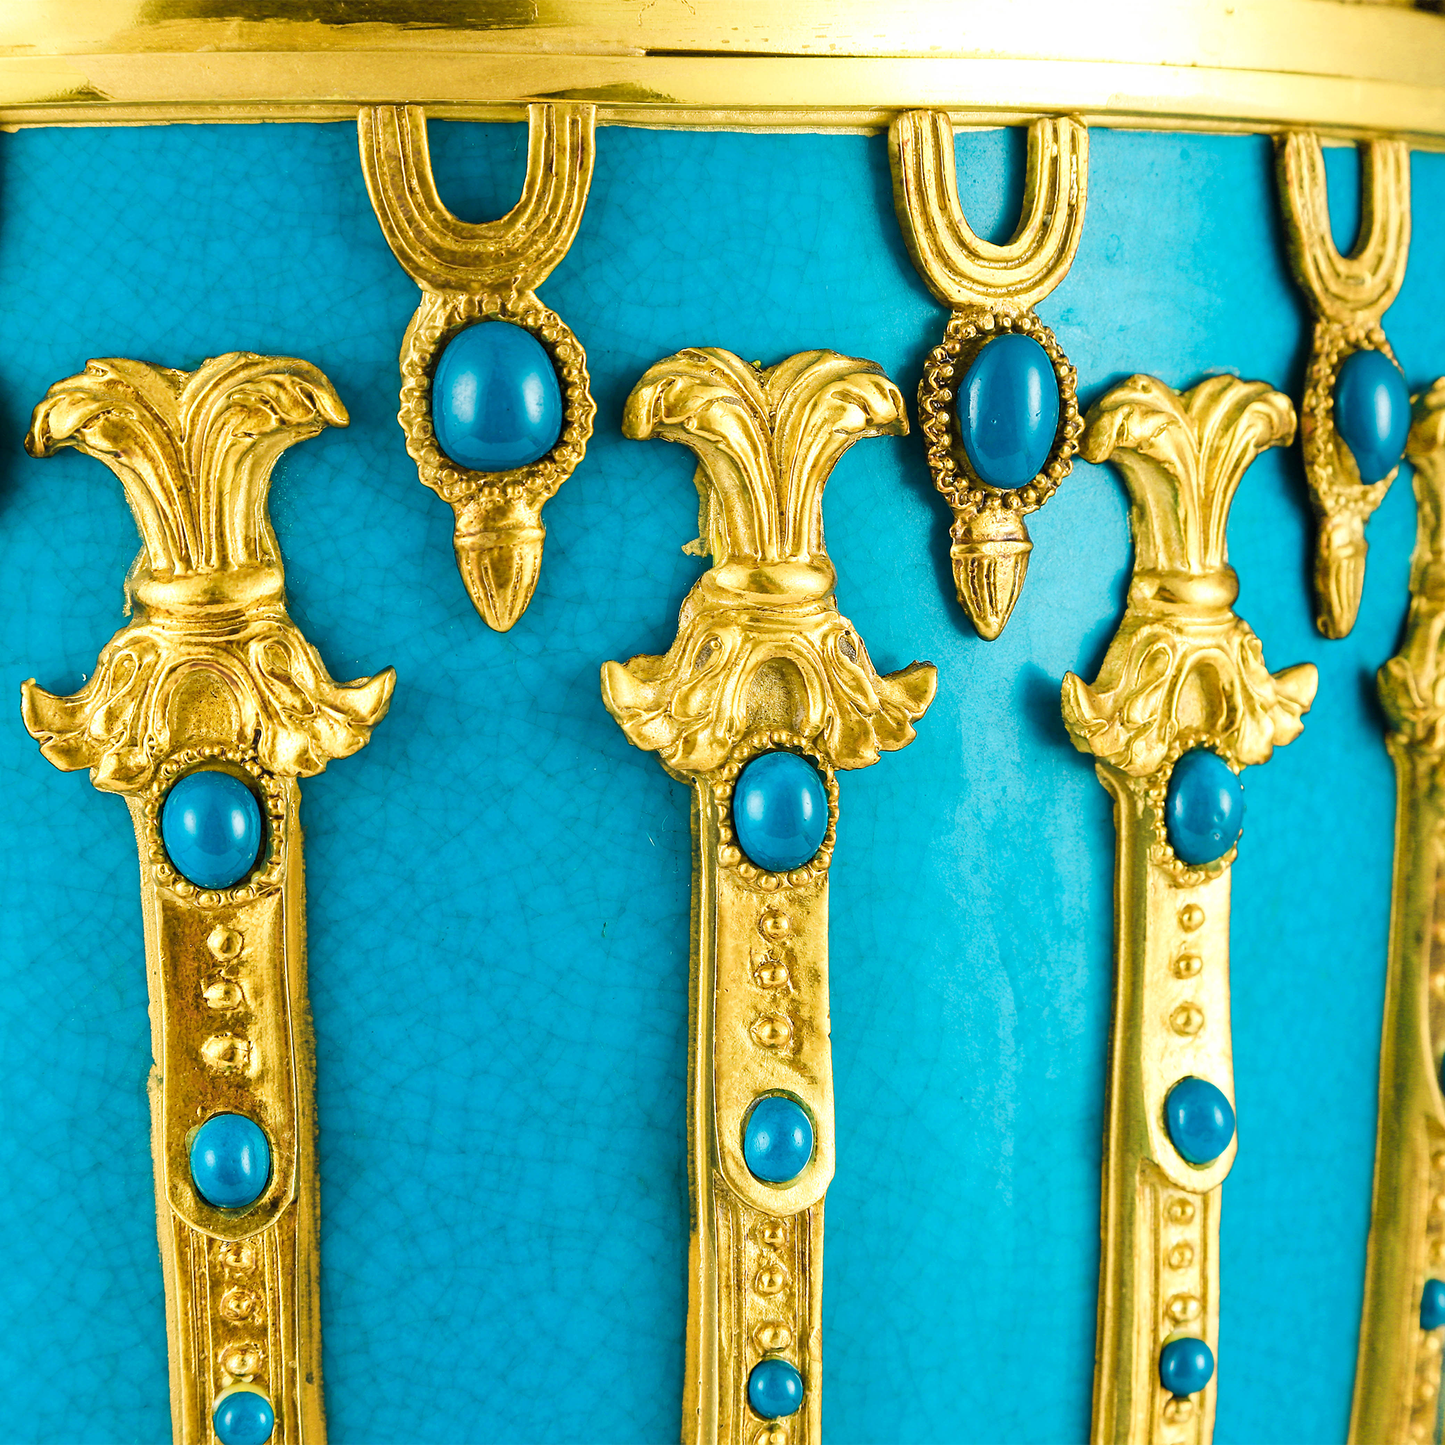 DECOELEVEN ™ Mythos Elegance Jar in Classic Blue